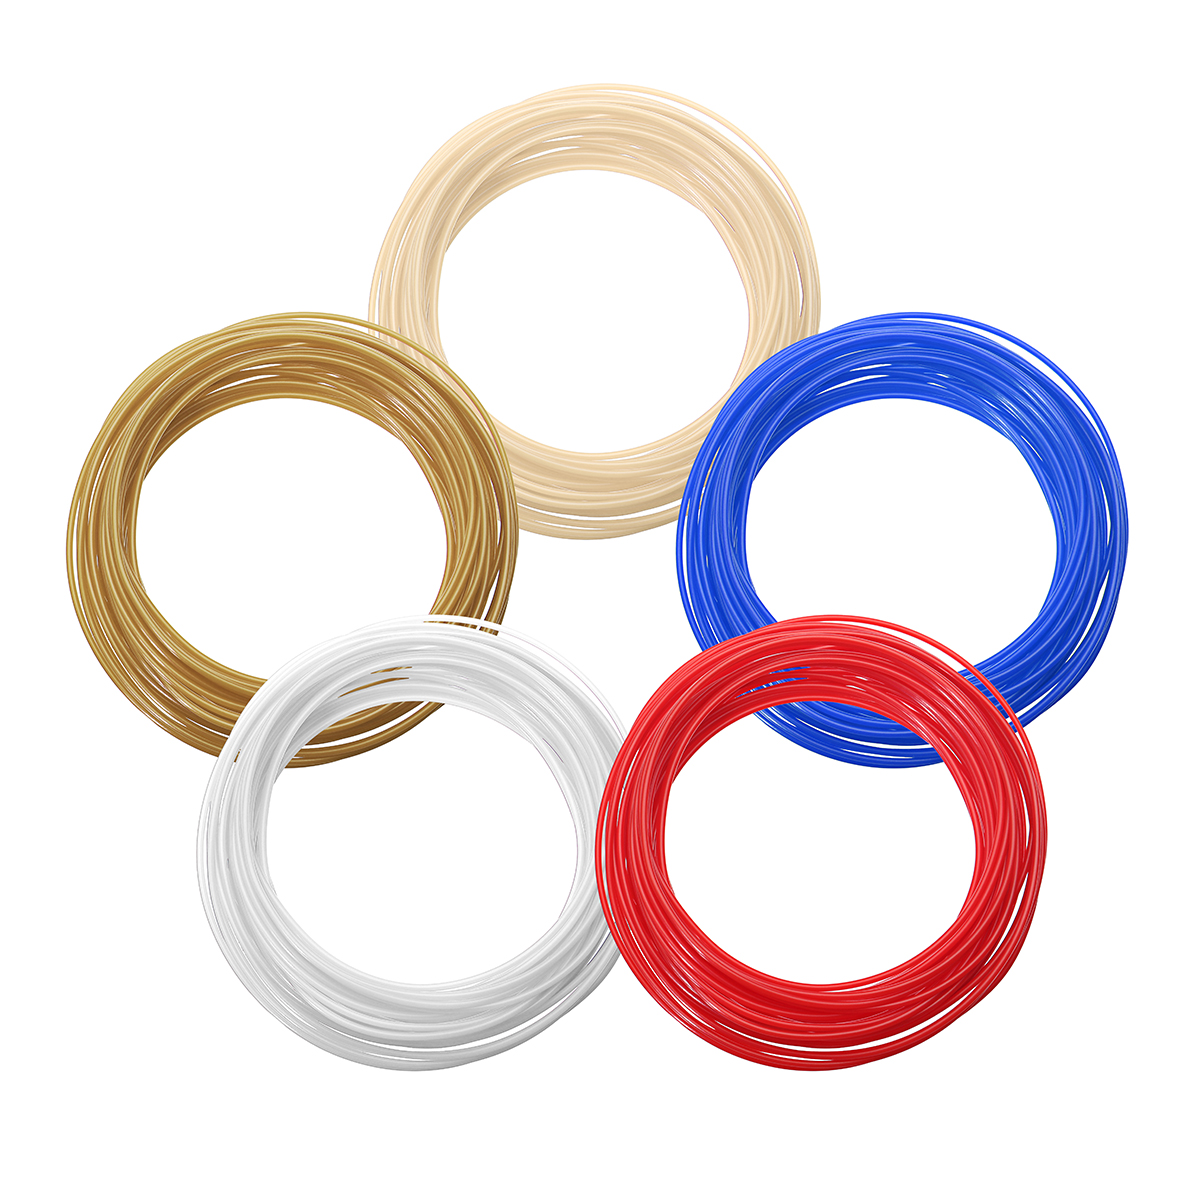 20 Colors/Pack 5/10m Length Per Color PLA 1.75mm Filament for 3D Printing Pen 0.4mm Nozzle 10